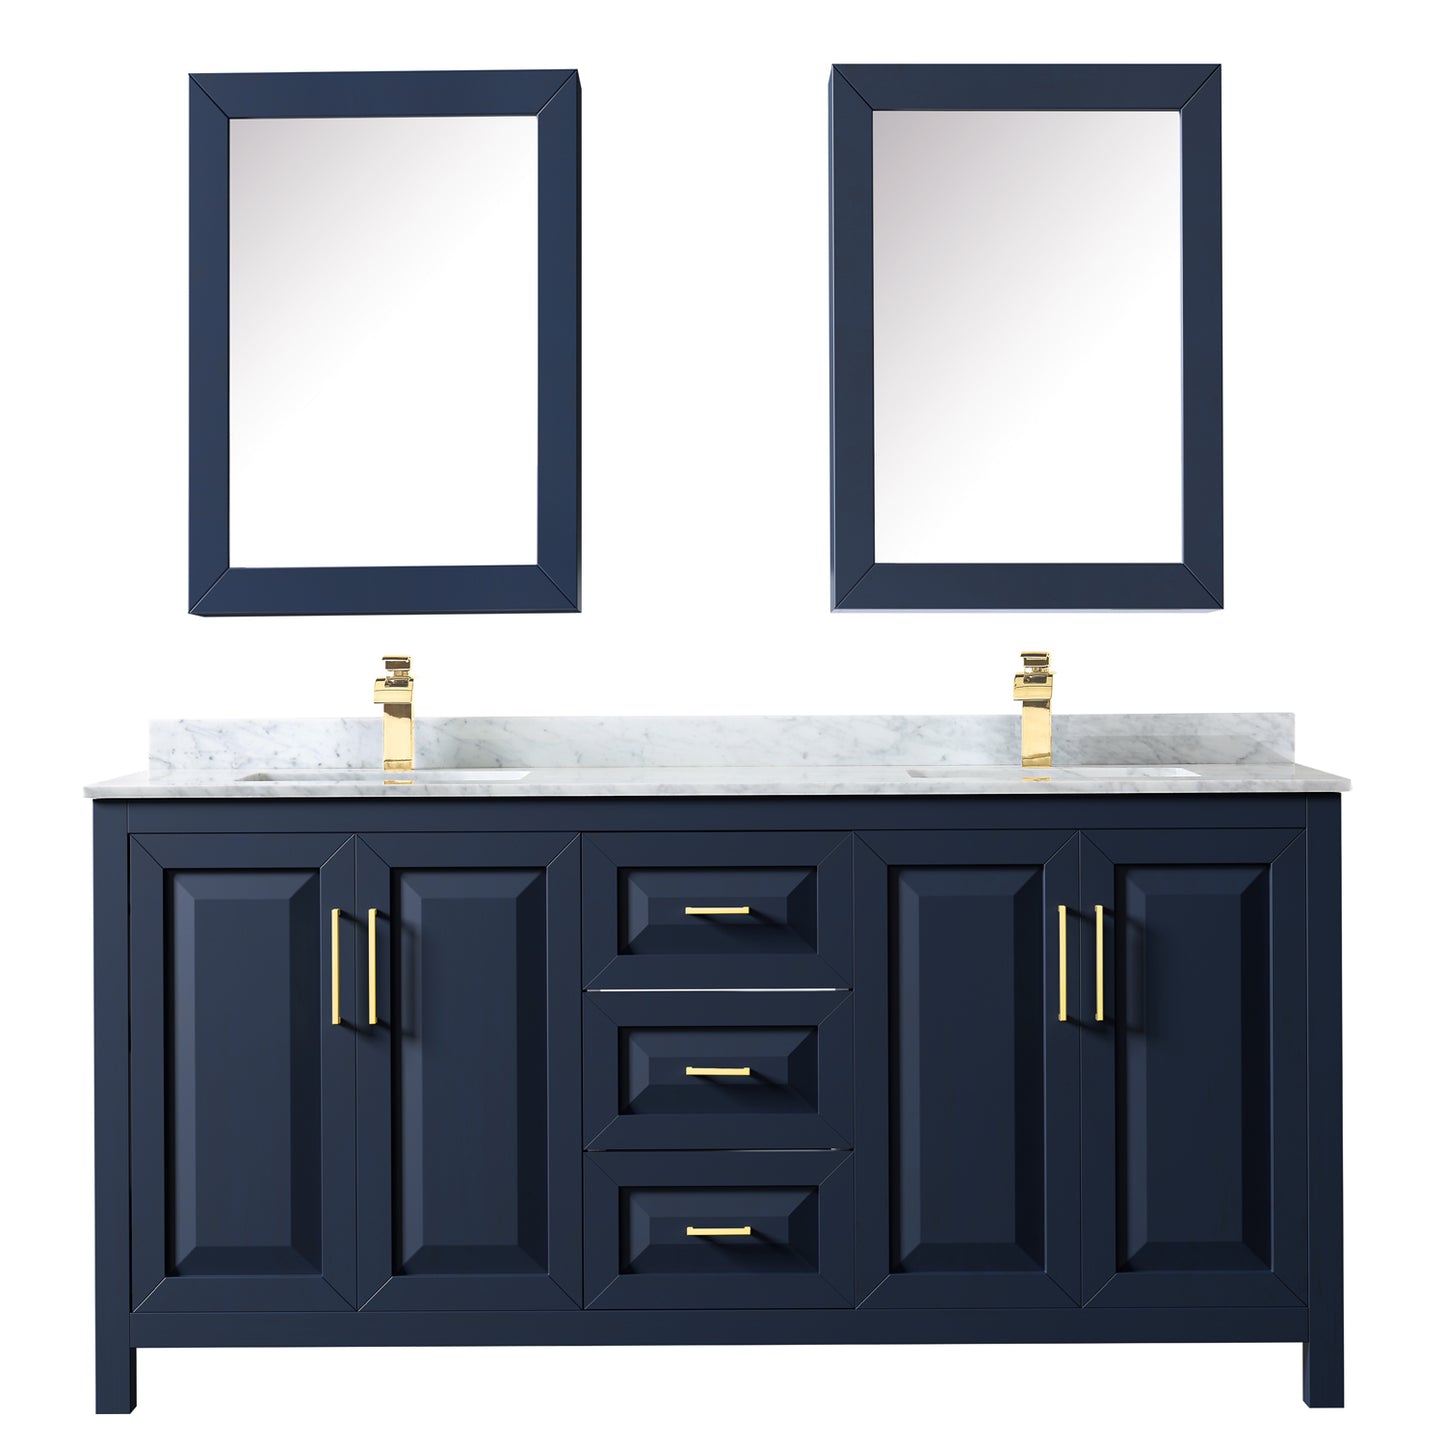 72 Inch Double Bathroom Vanity in Dark Blue, White Carrara Marble Countertop, Undermount Square Sinks, Medicine Cabinets - Luxe Bathroom Vanities Luxury Bathroom Fixtures Bathroom Furniture